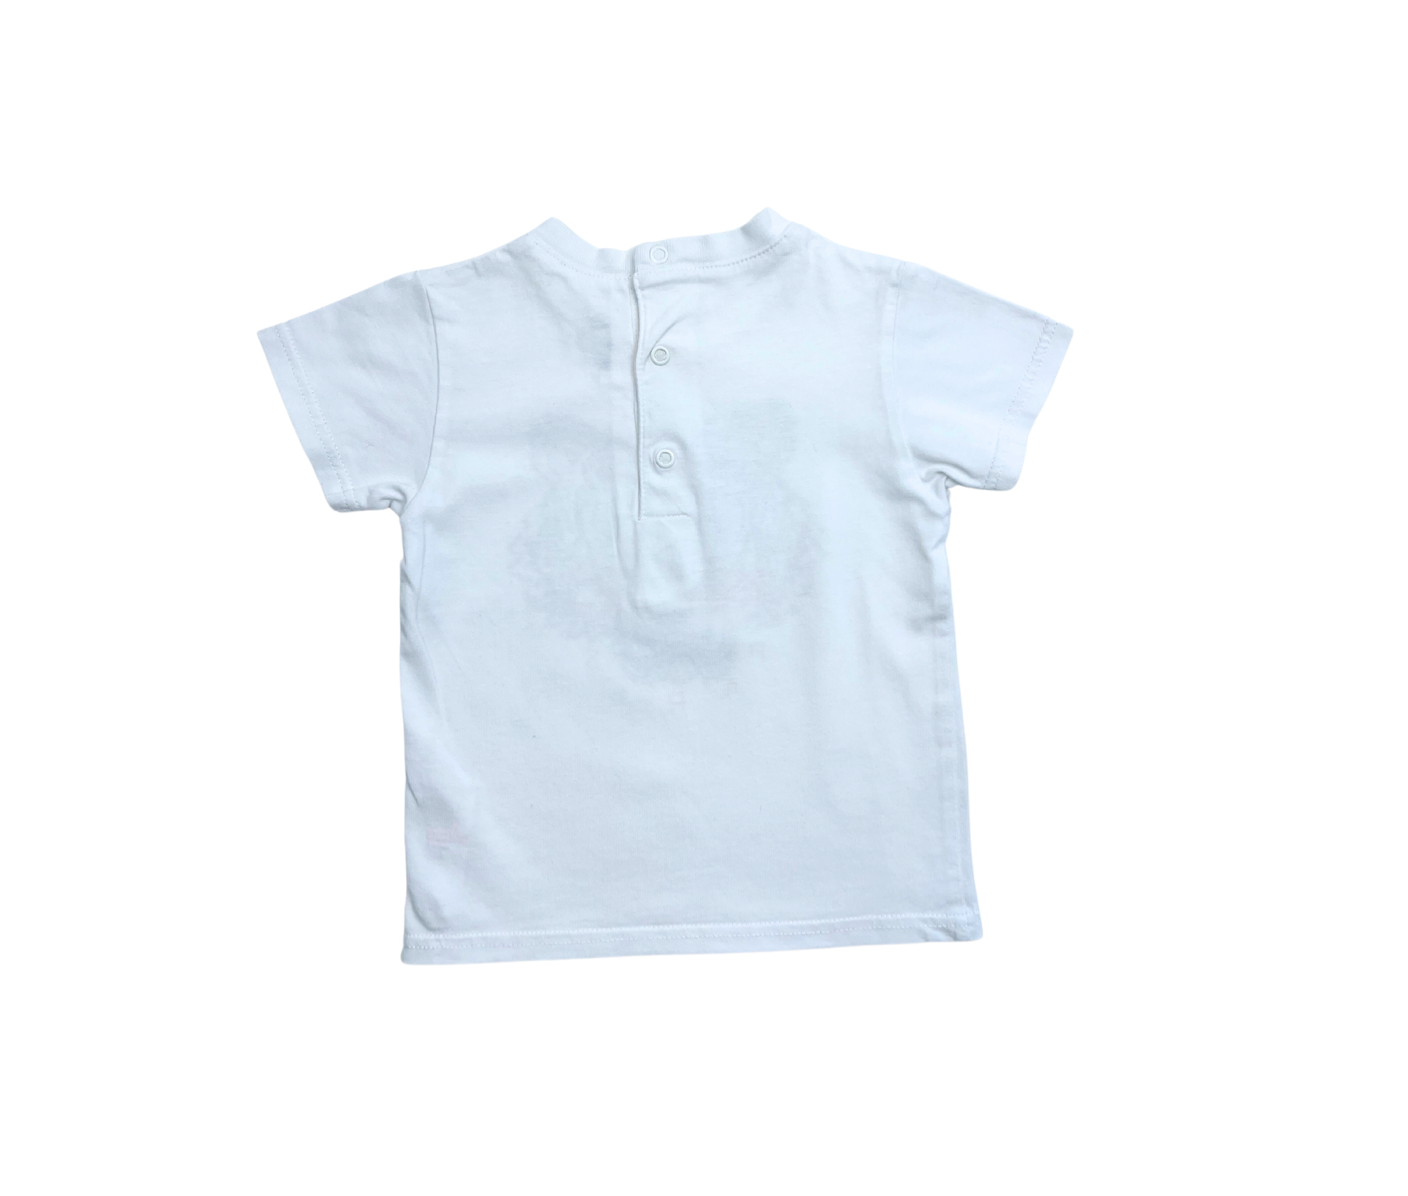 KENZO - T-shirt manches courtes blanc motif tête de tigre - 12 mois